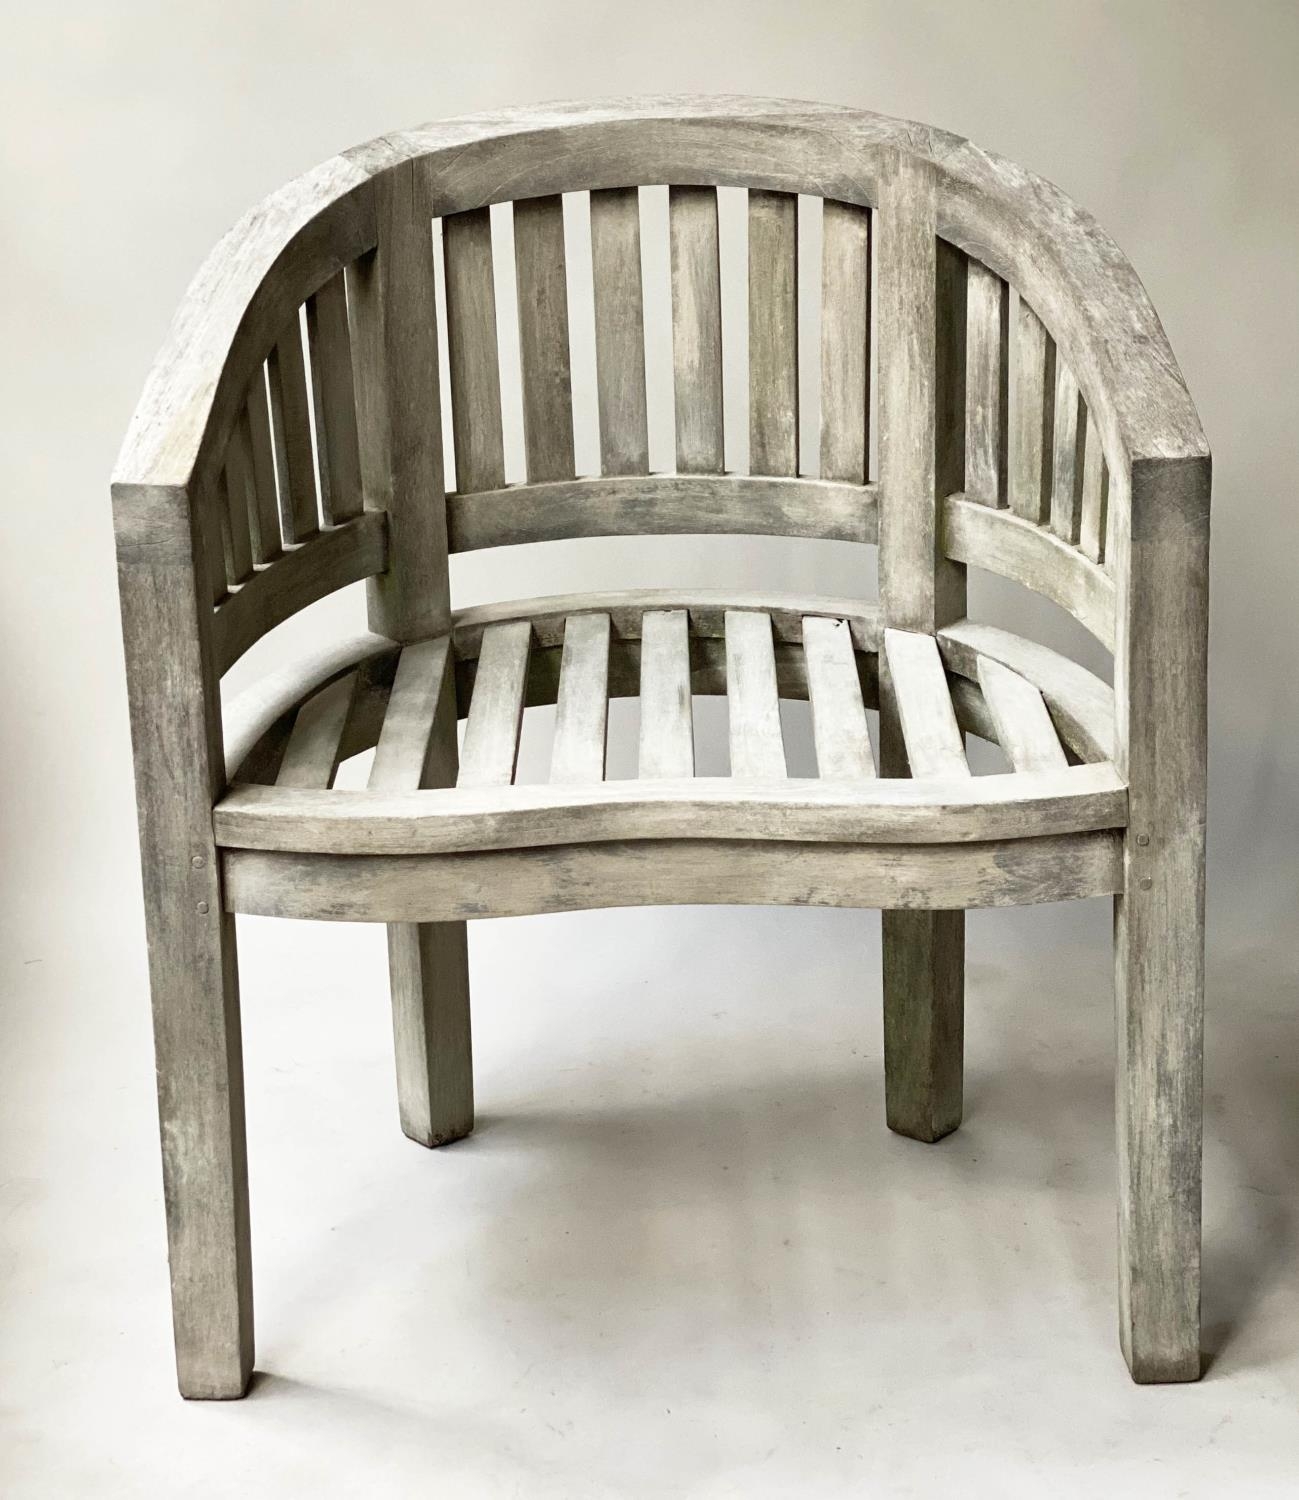 GARDEN TABLE, circular slatted weathered teak together with a Java teak garden armchair, 80cm diam x - Image 7 of 9